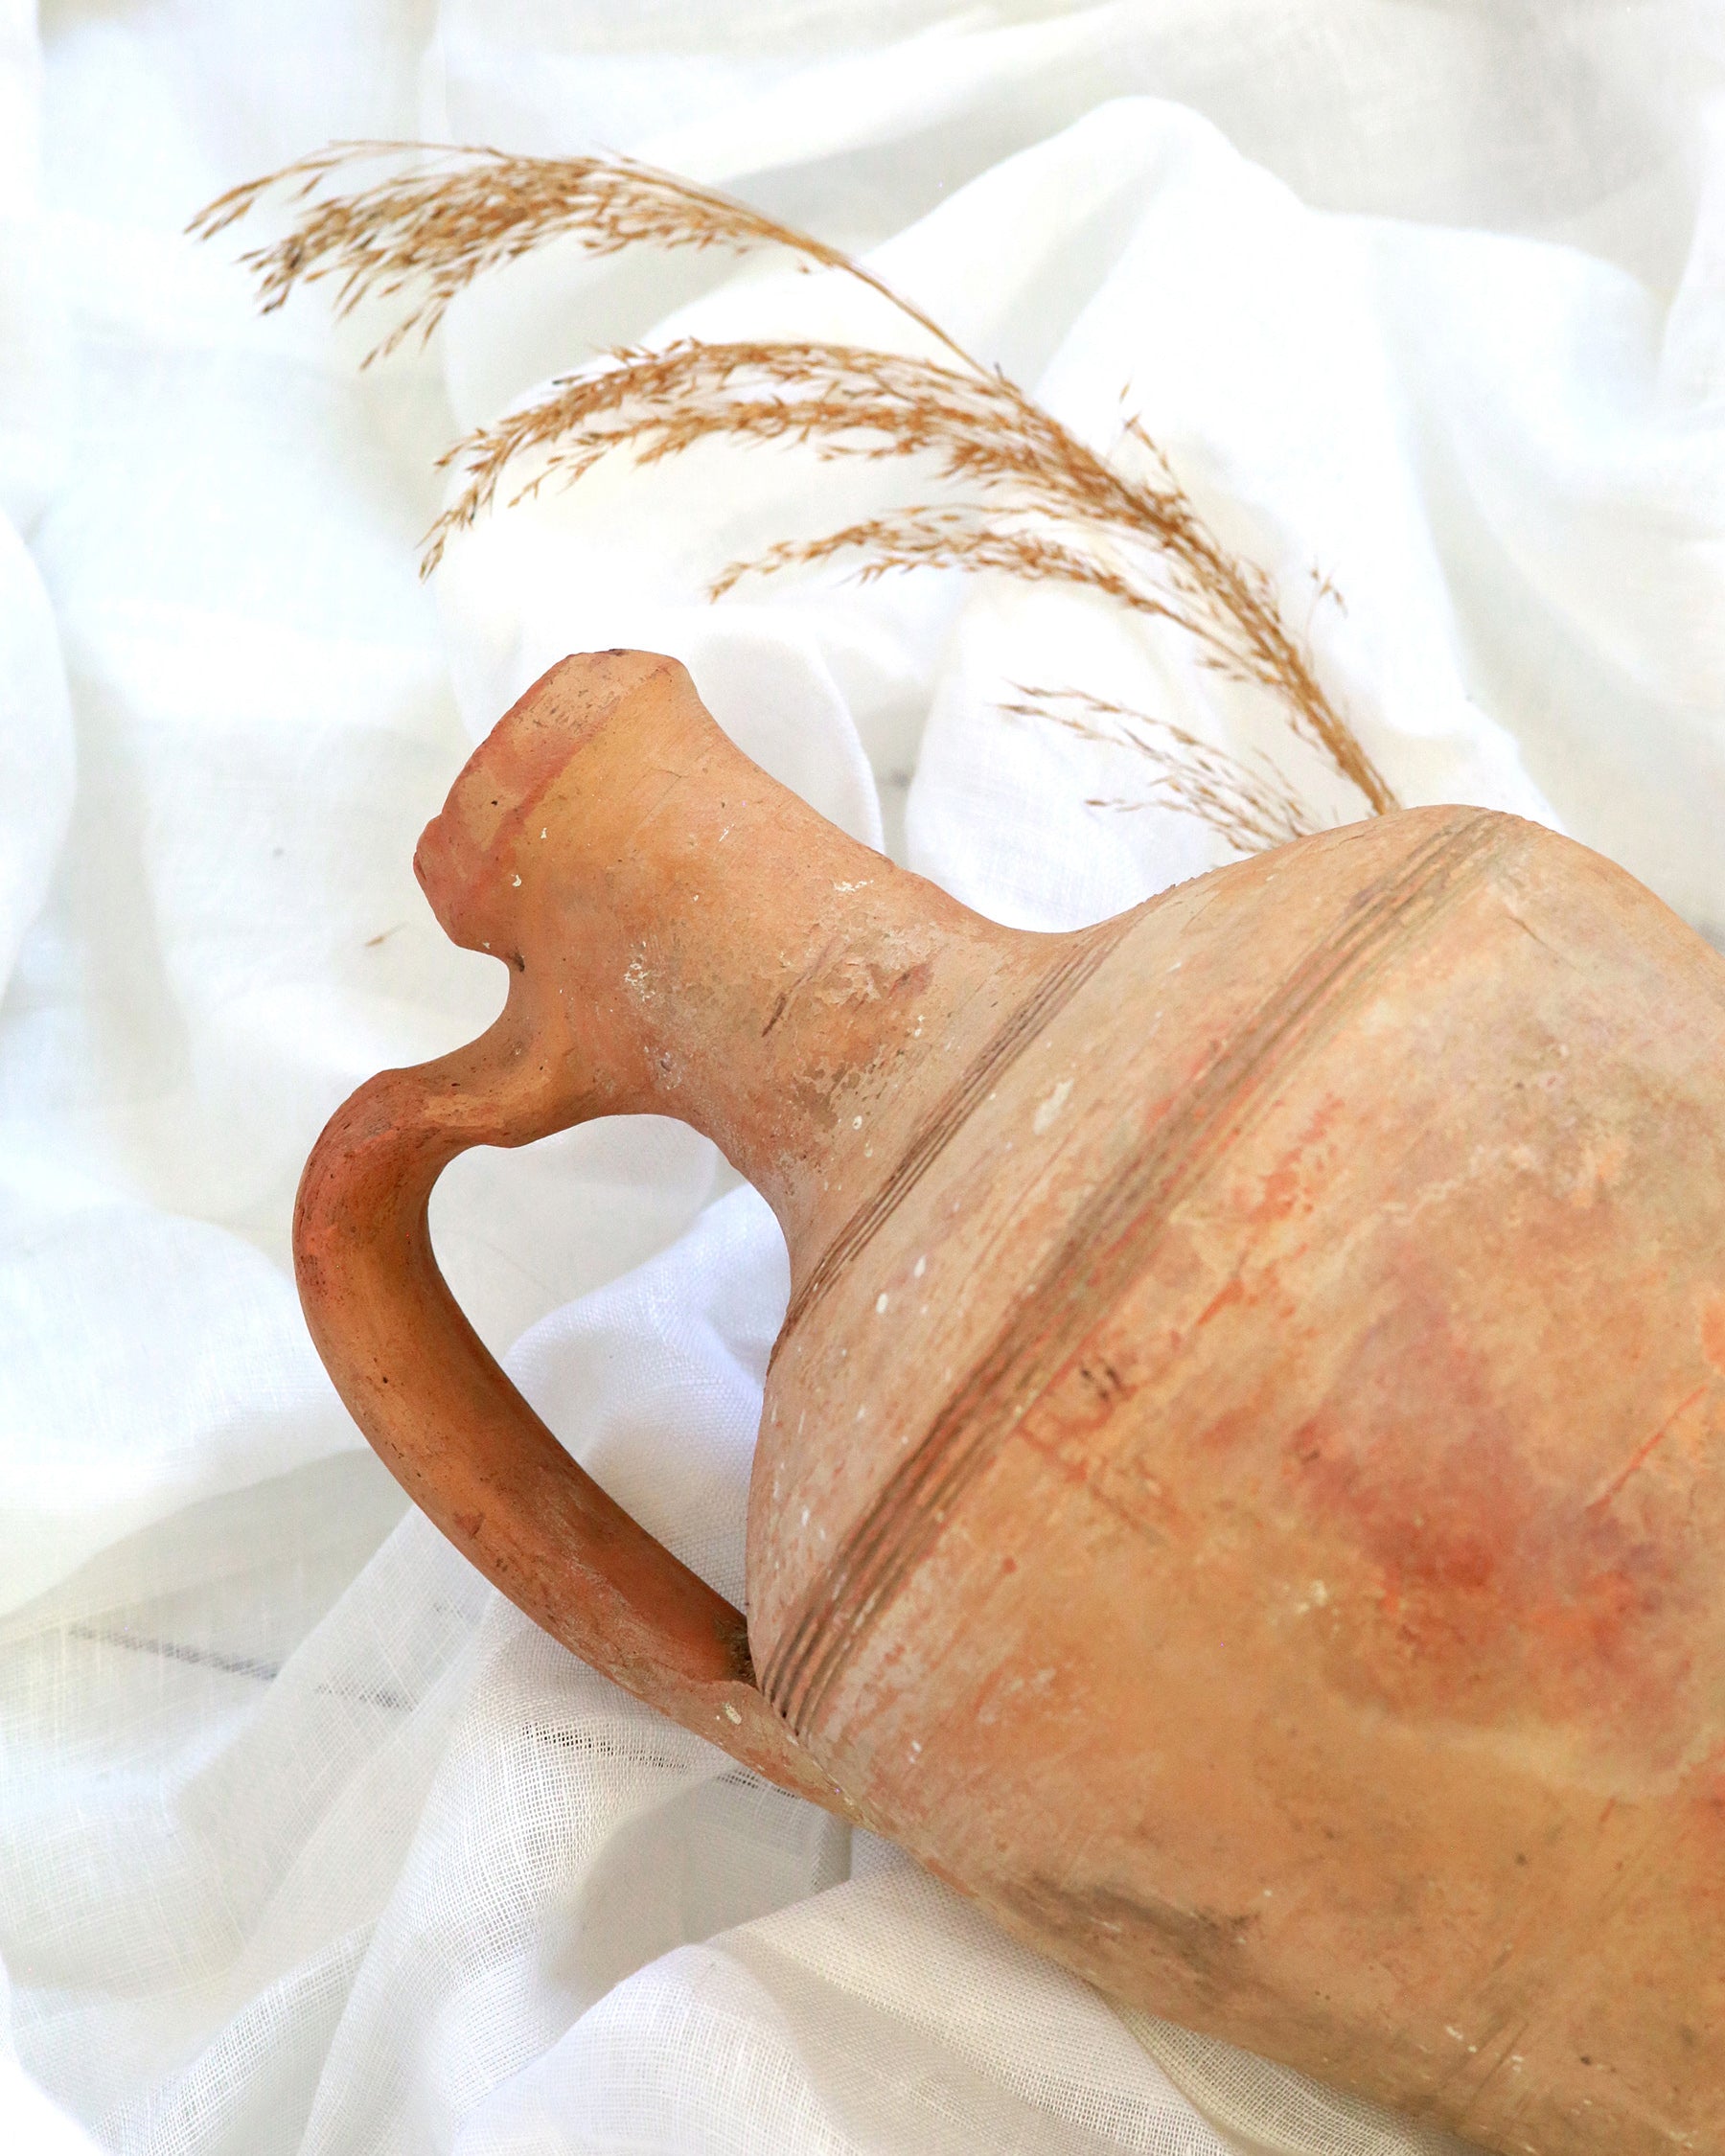 Original terracotta pot with handle and decorative stem